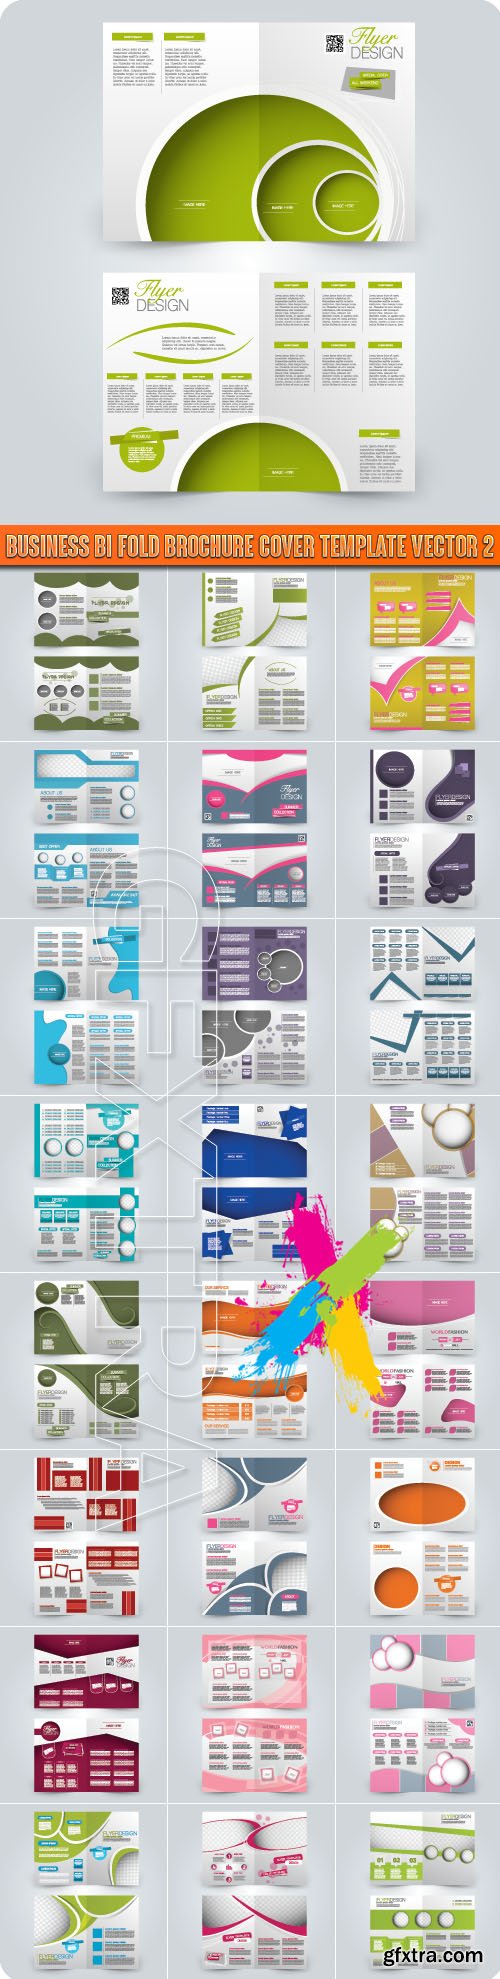 Business bi fold brochure cover template vector 2